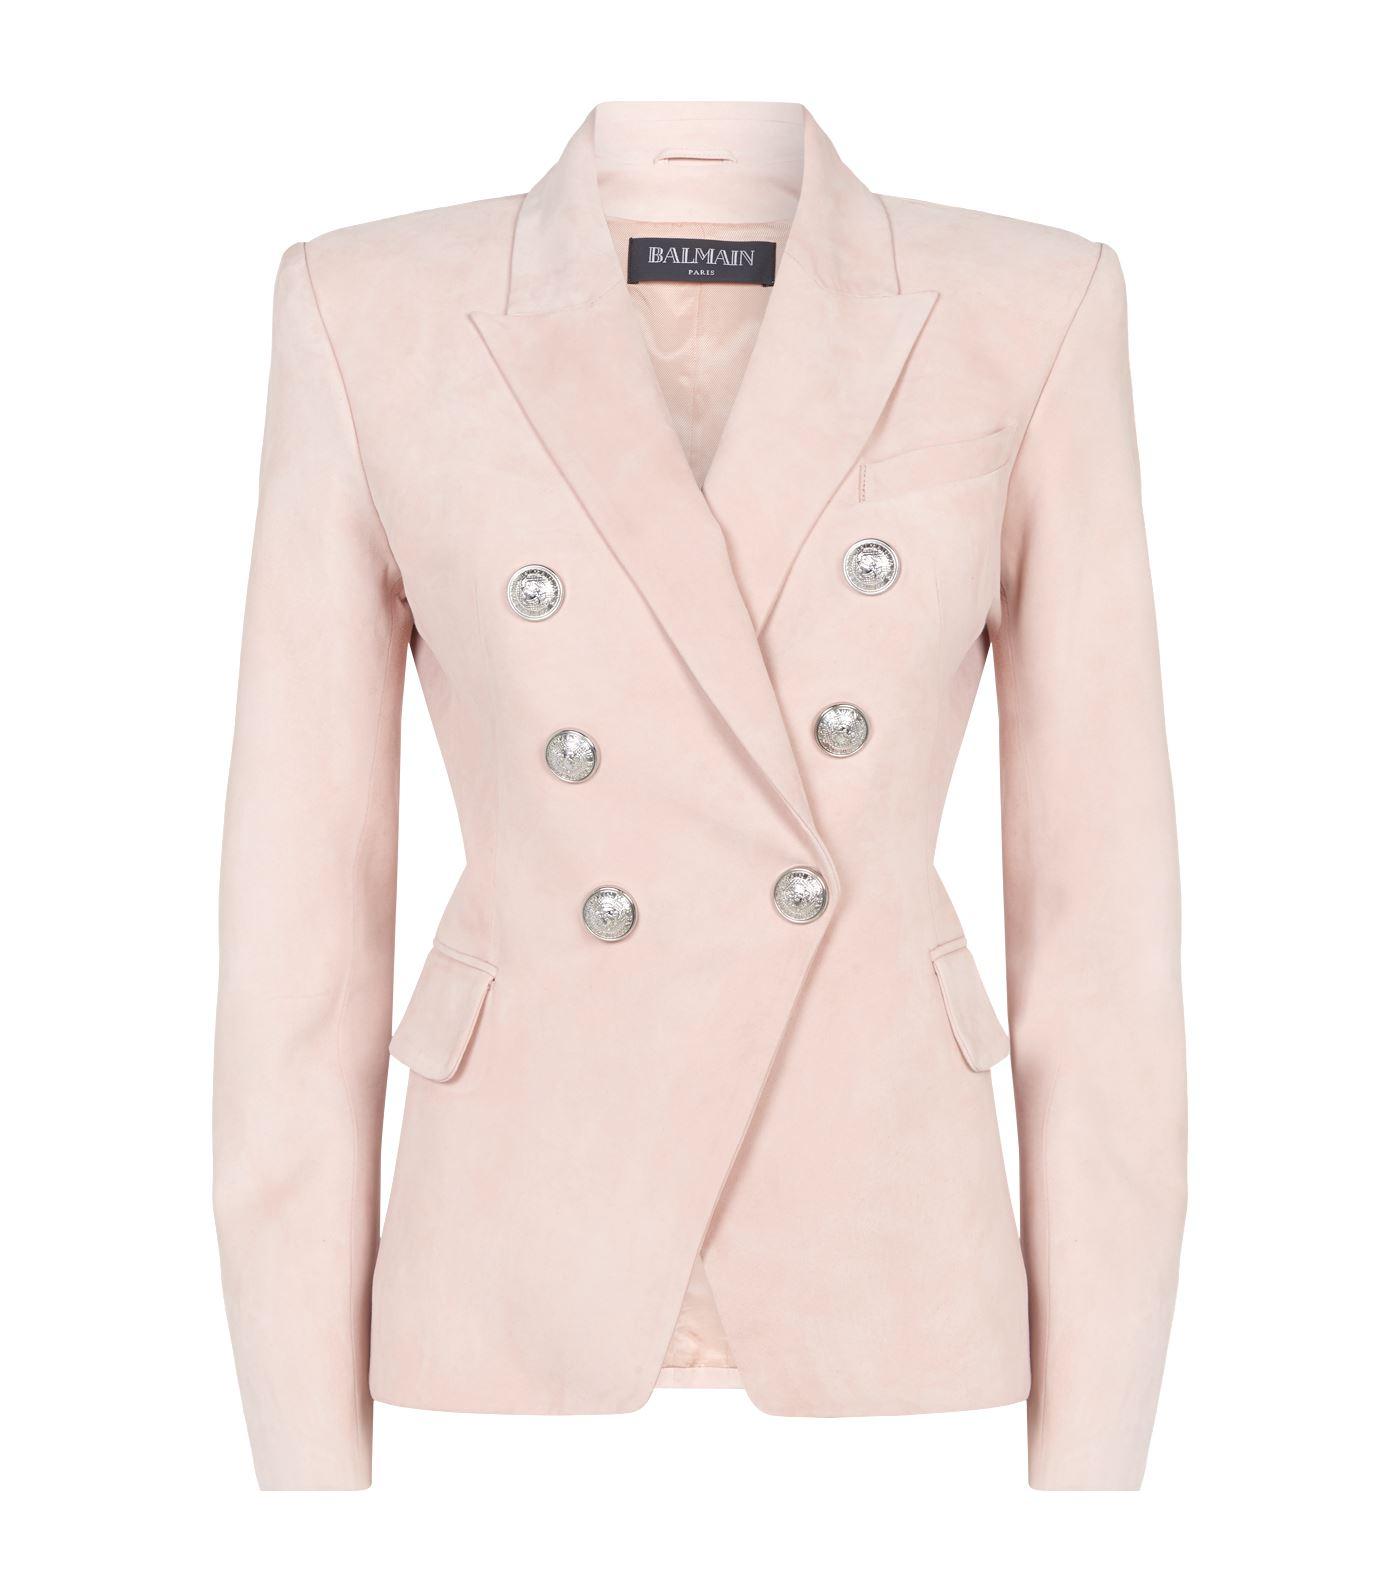 Balmain Classic Suede Blazer Jacket in Pink - Lyst